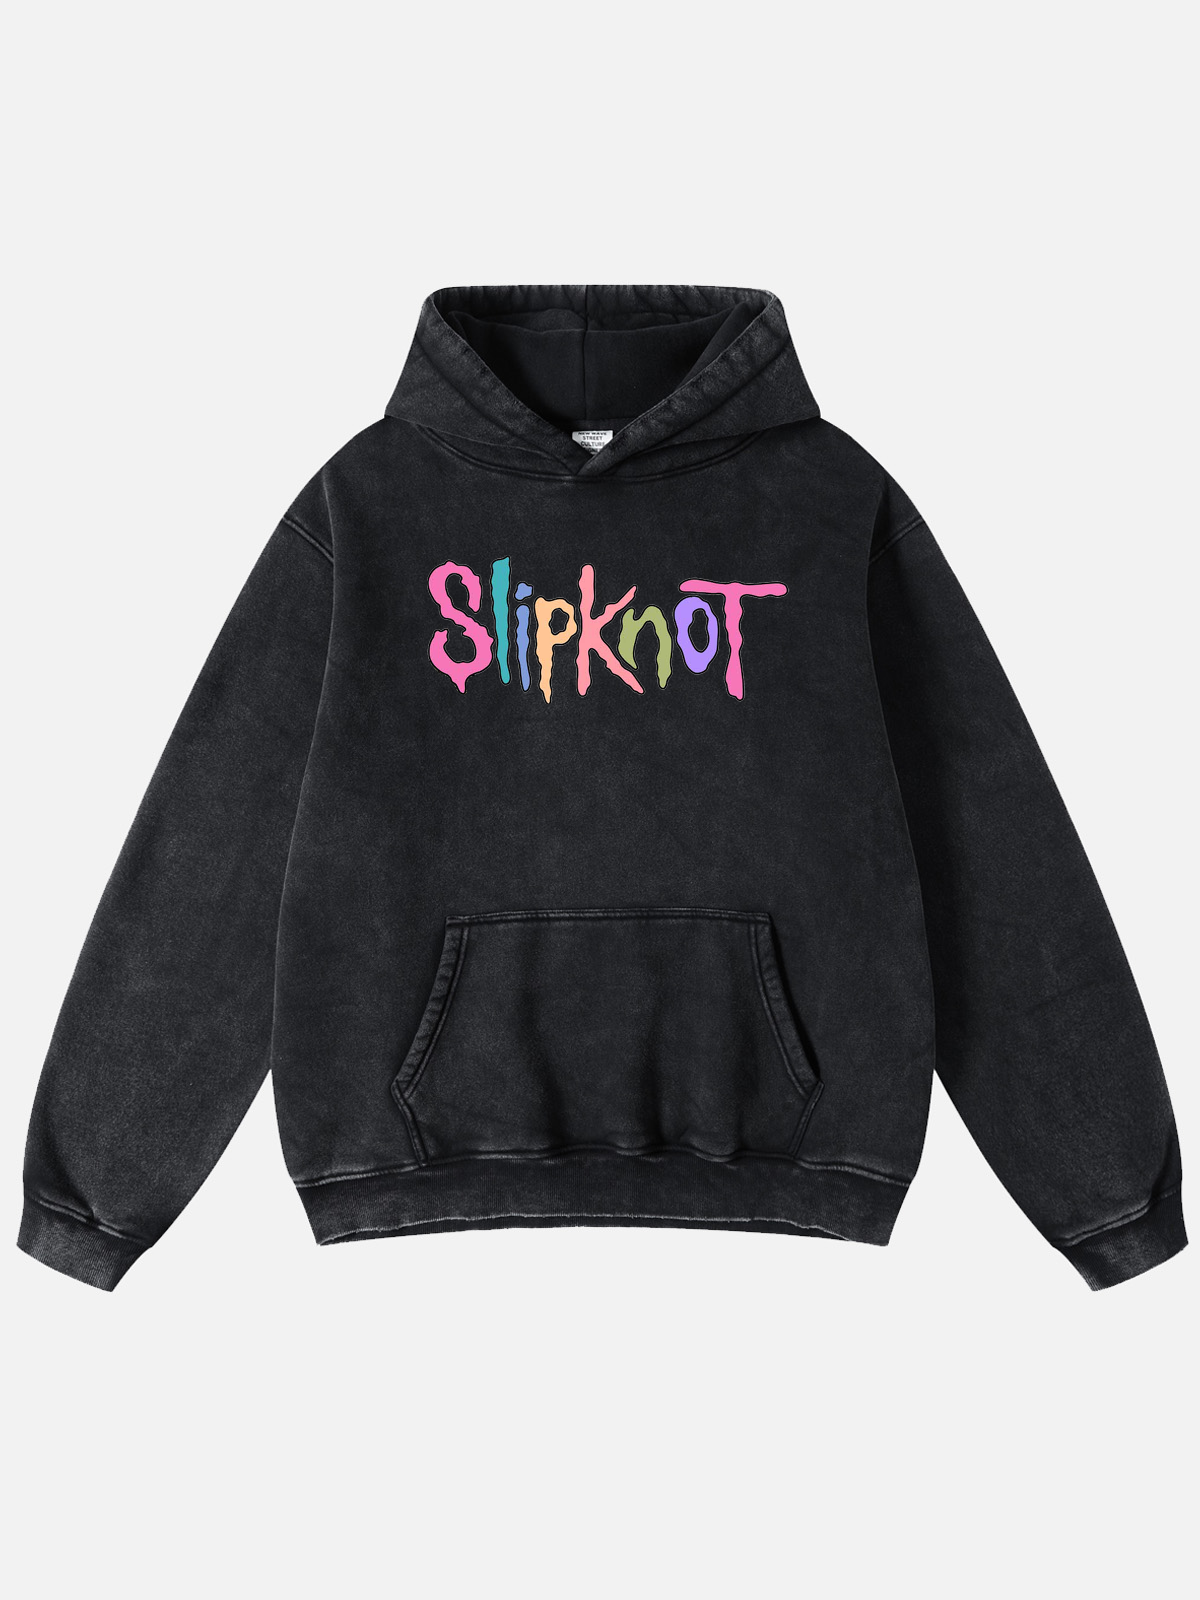 Tidense Slipknot Wash Hooded Sweatshirt